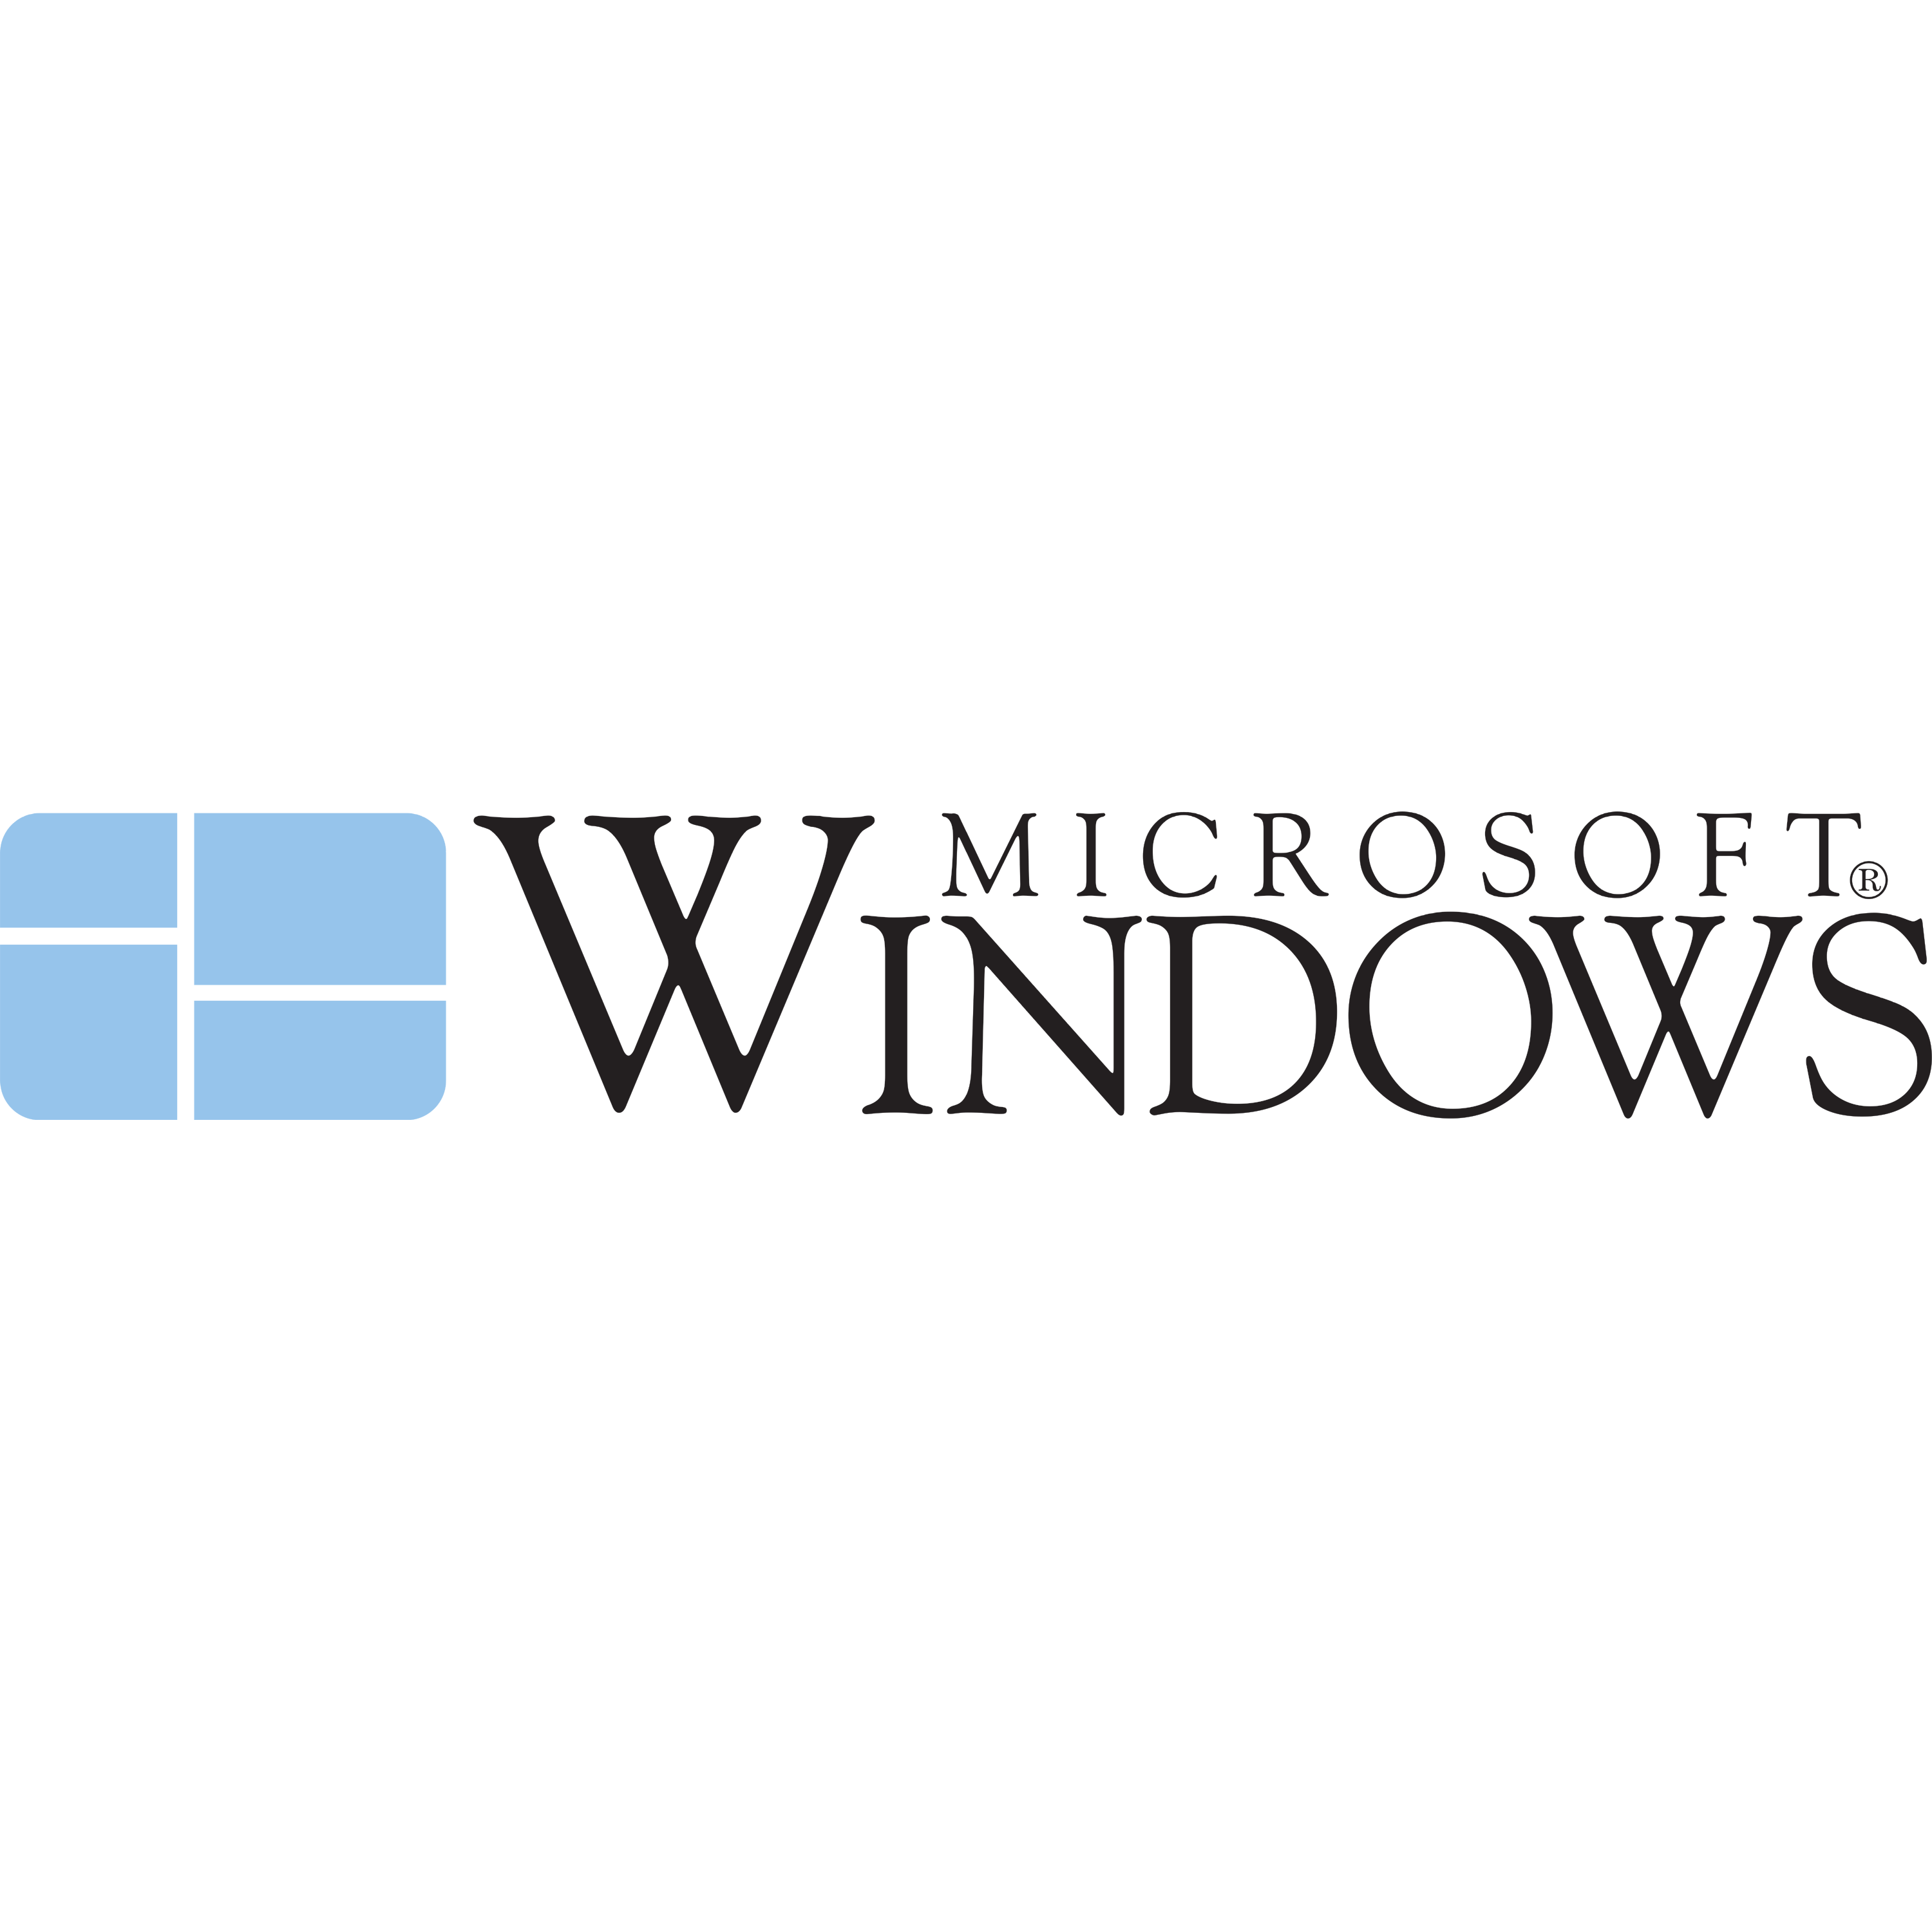 Microsoft Windows 1985 Logo Transparent Image